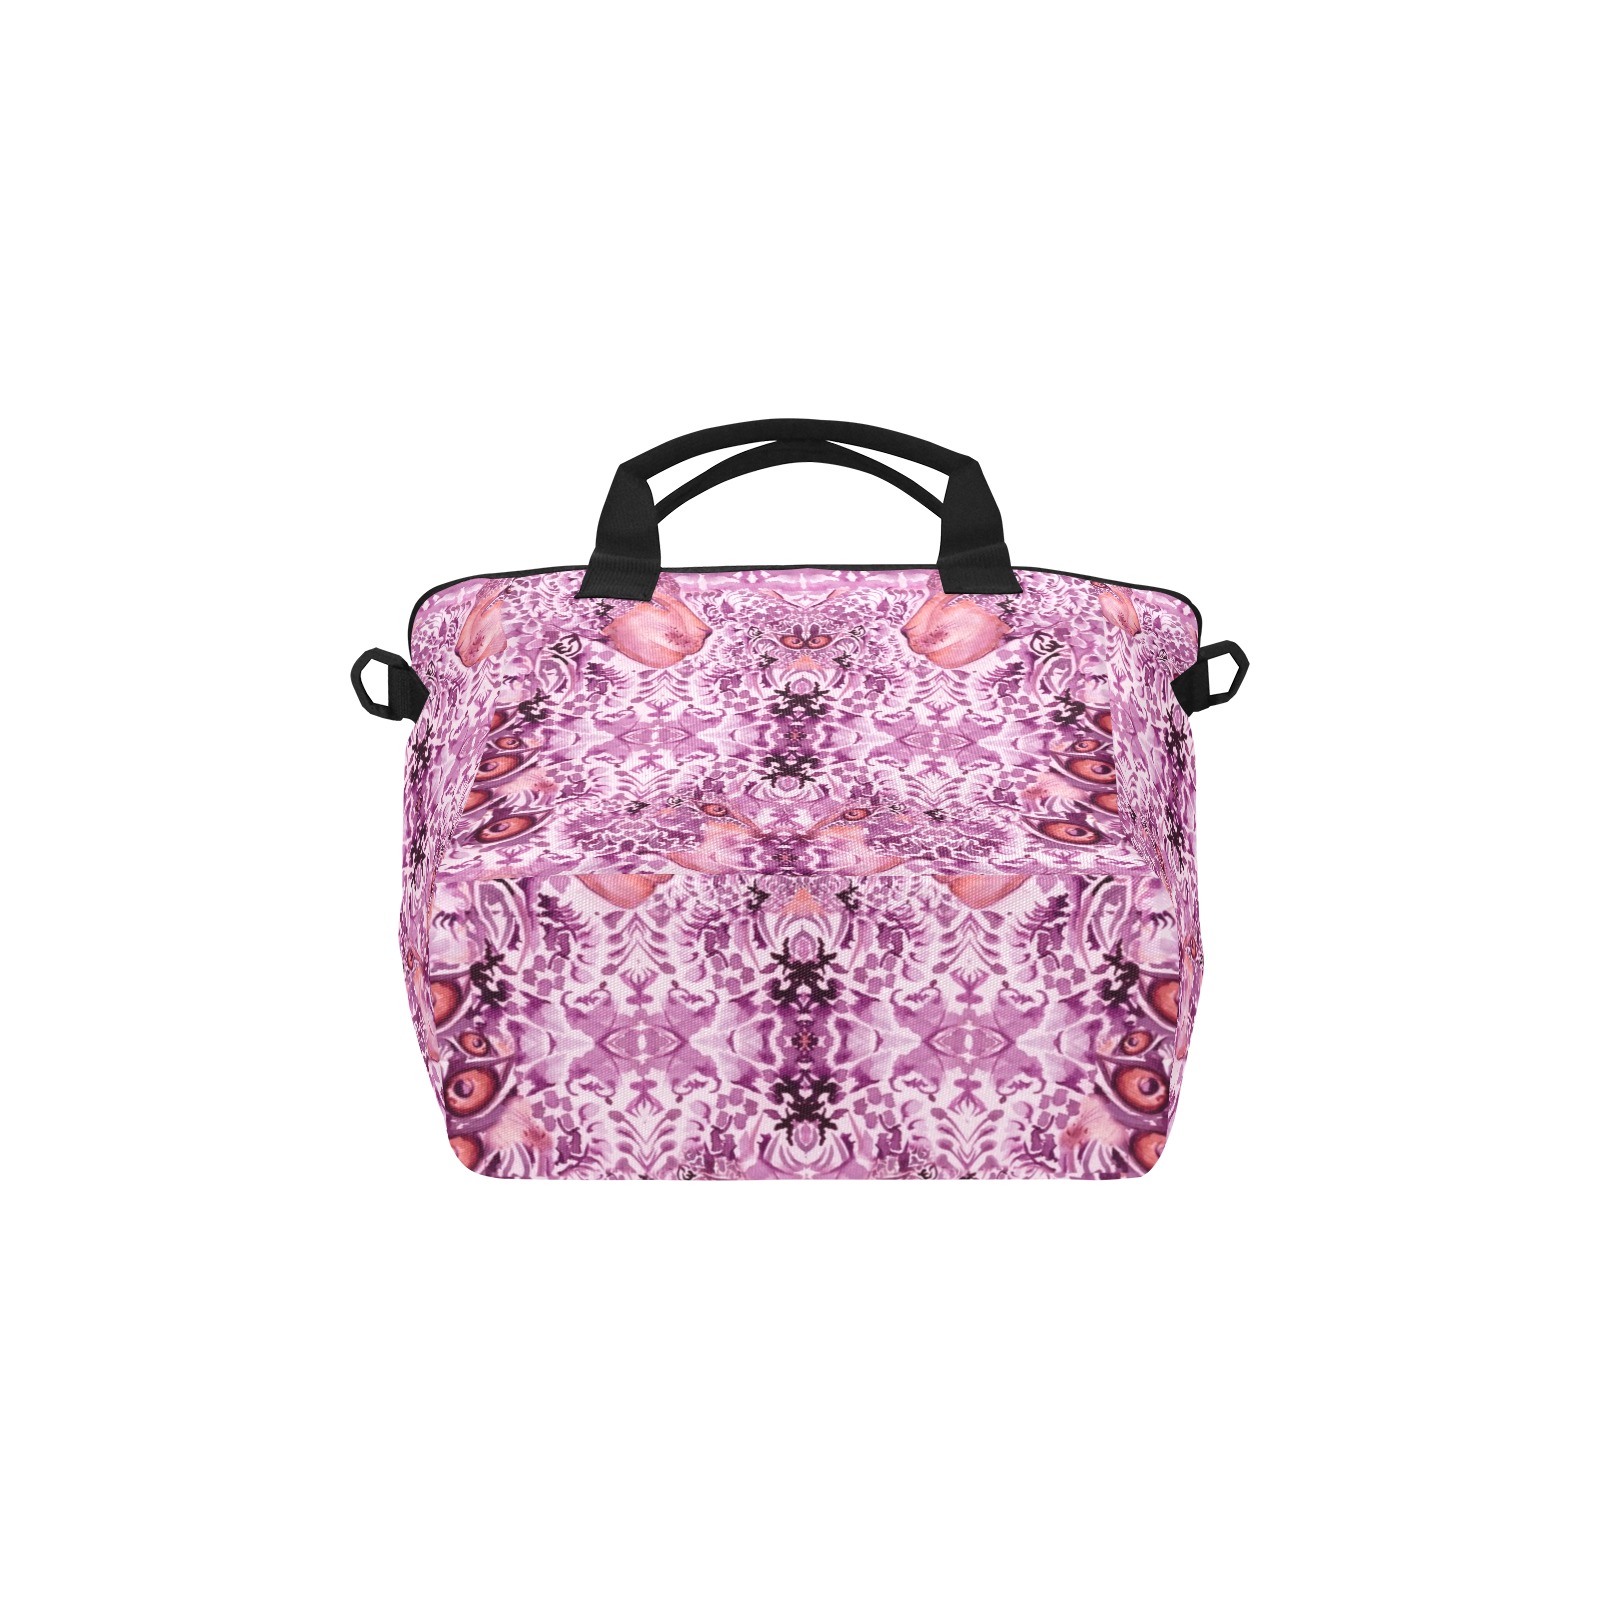 Nidhi December 2014-pattern 4-pink-44x55inchesv Tote Bag with Shoulder Strap (Model 1724)